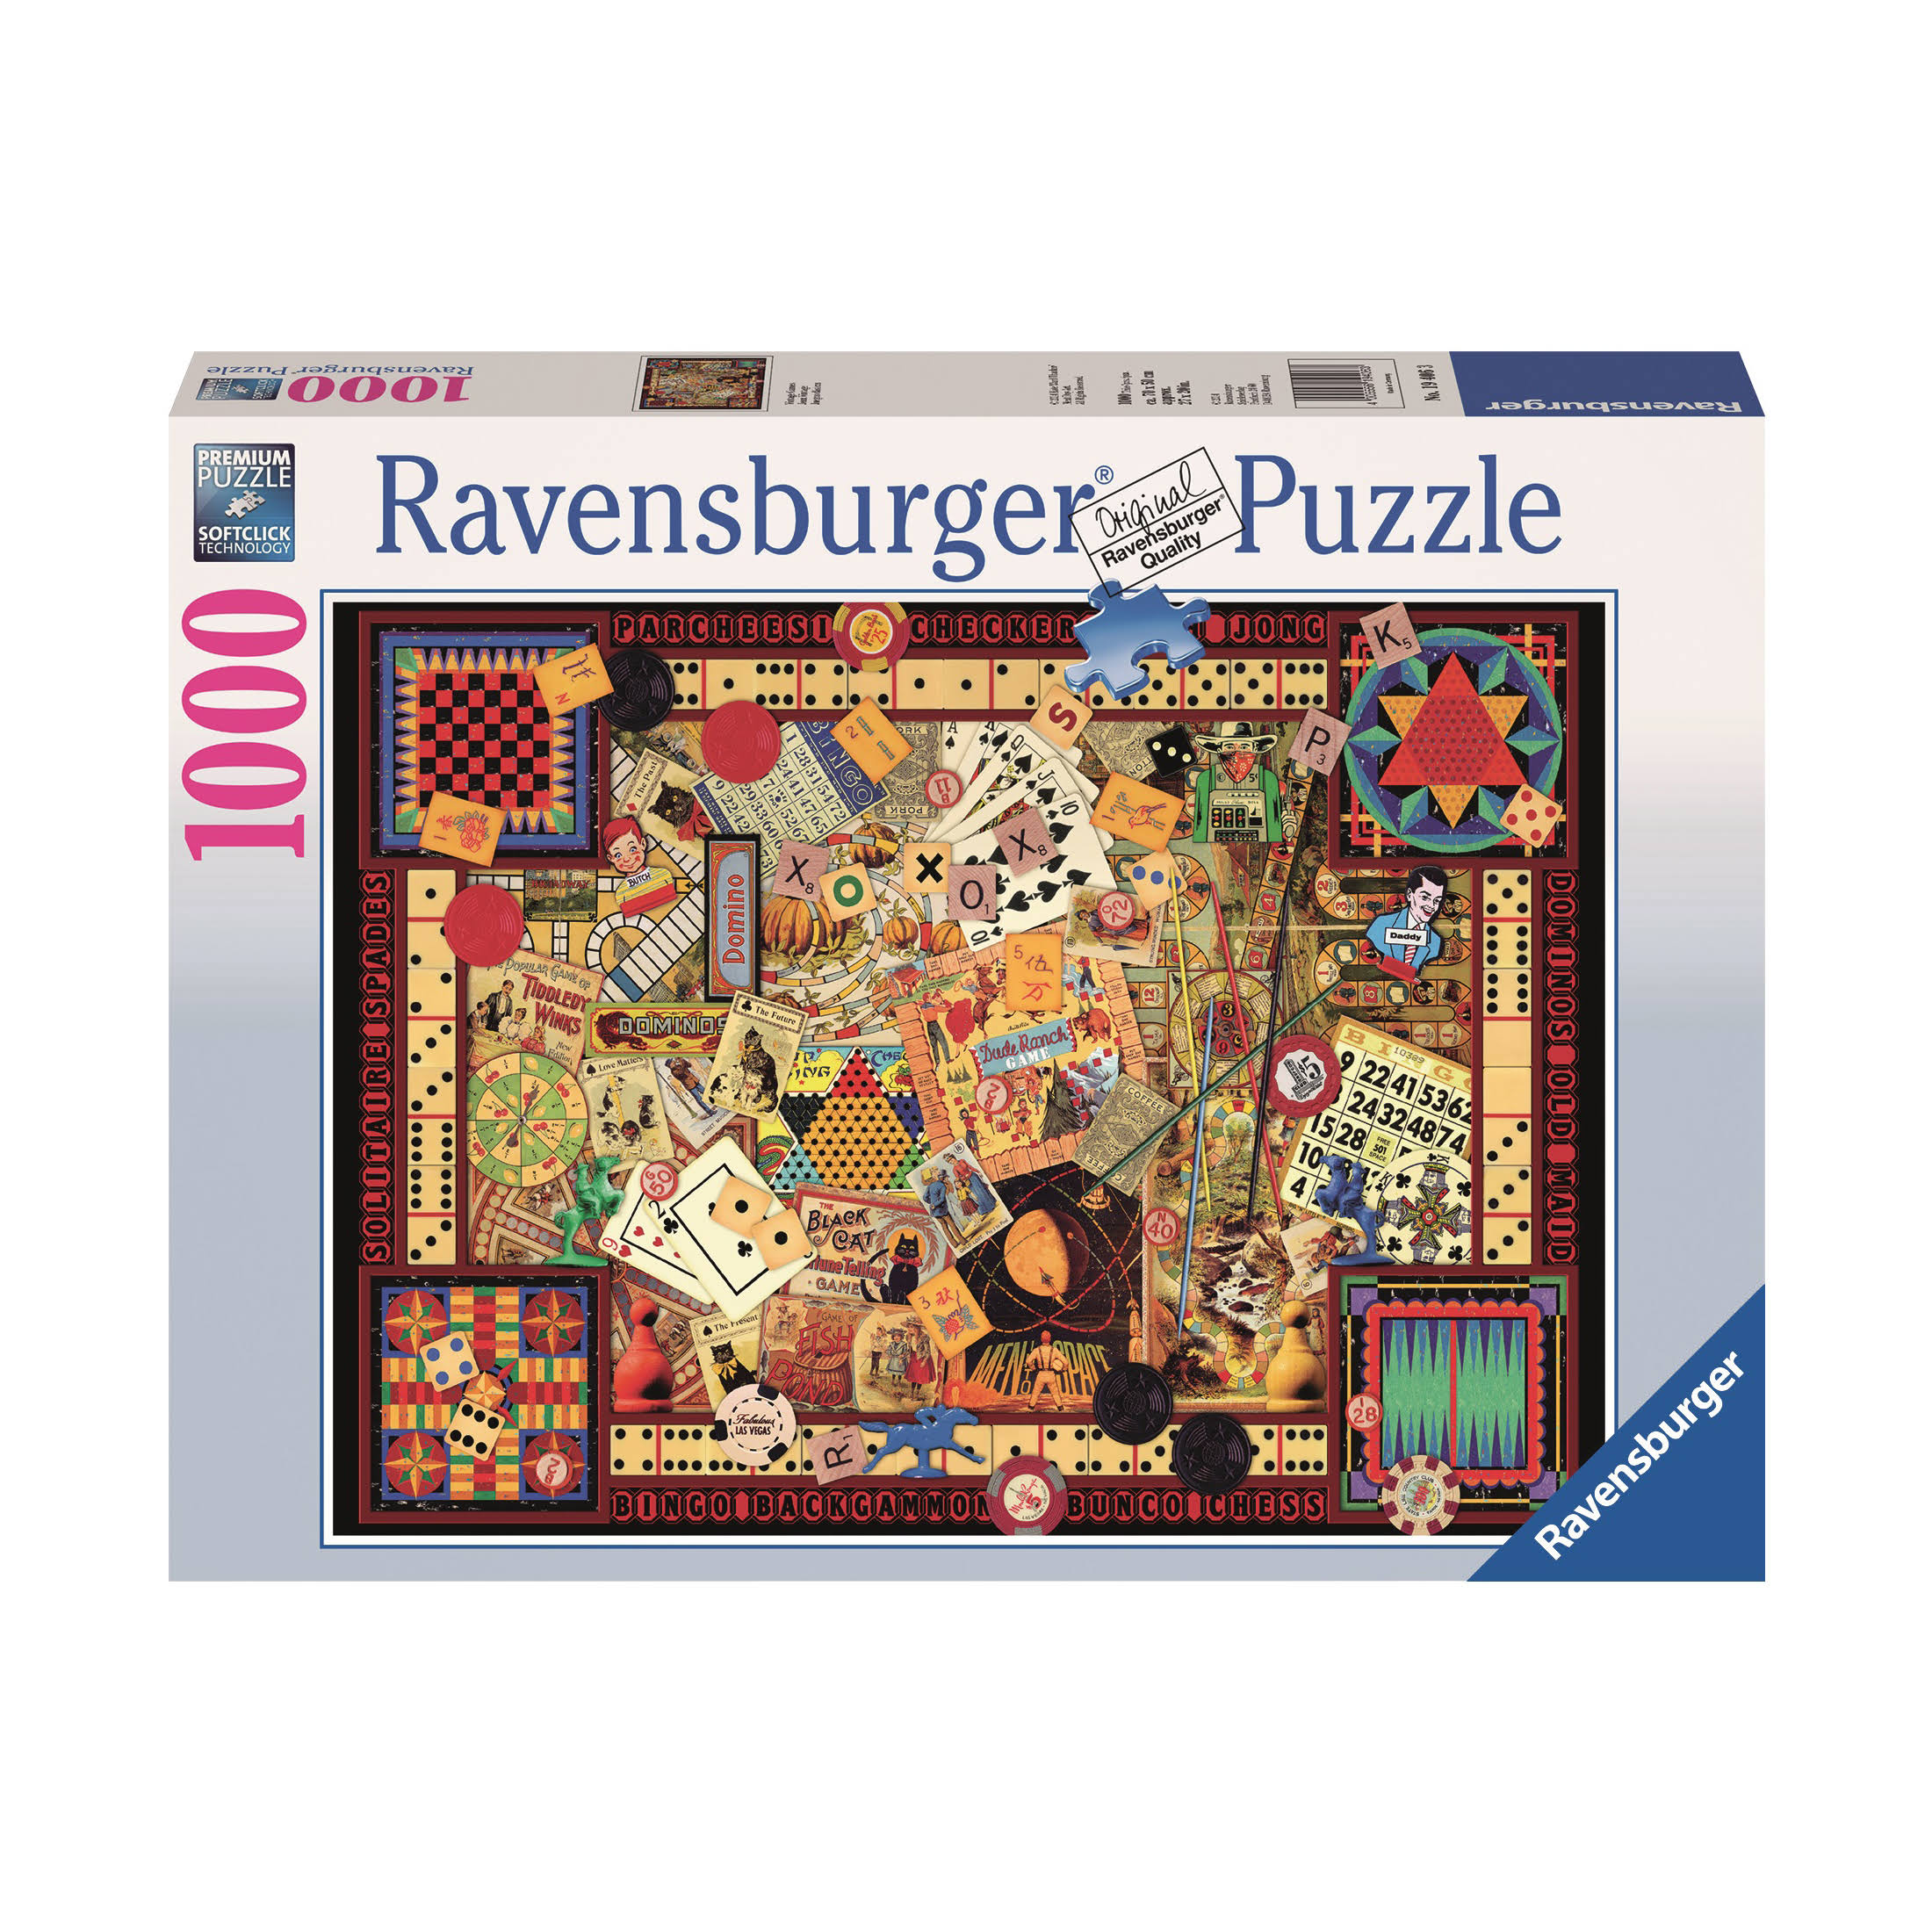 Ravensburger Vintage Games 1000-Piece Jigsaw Puzzle